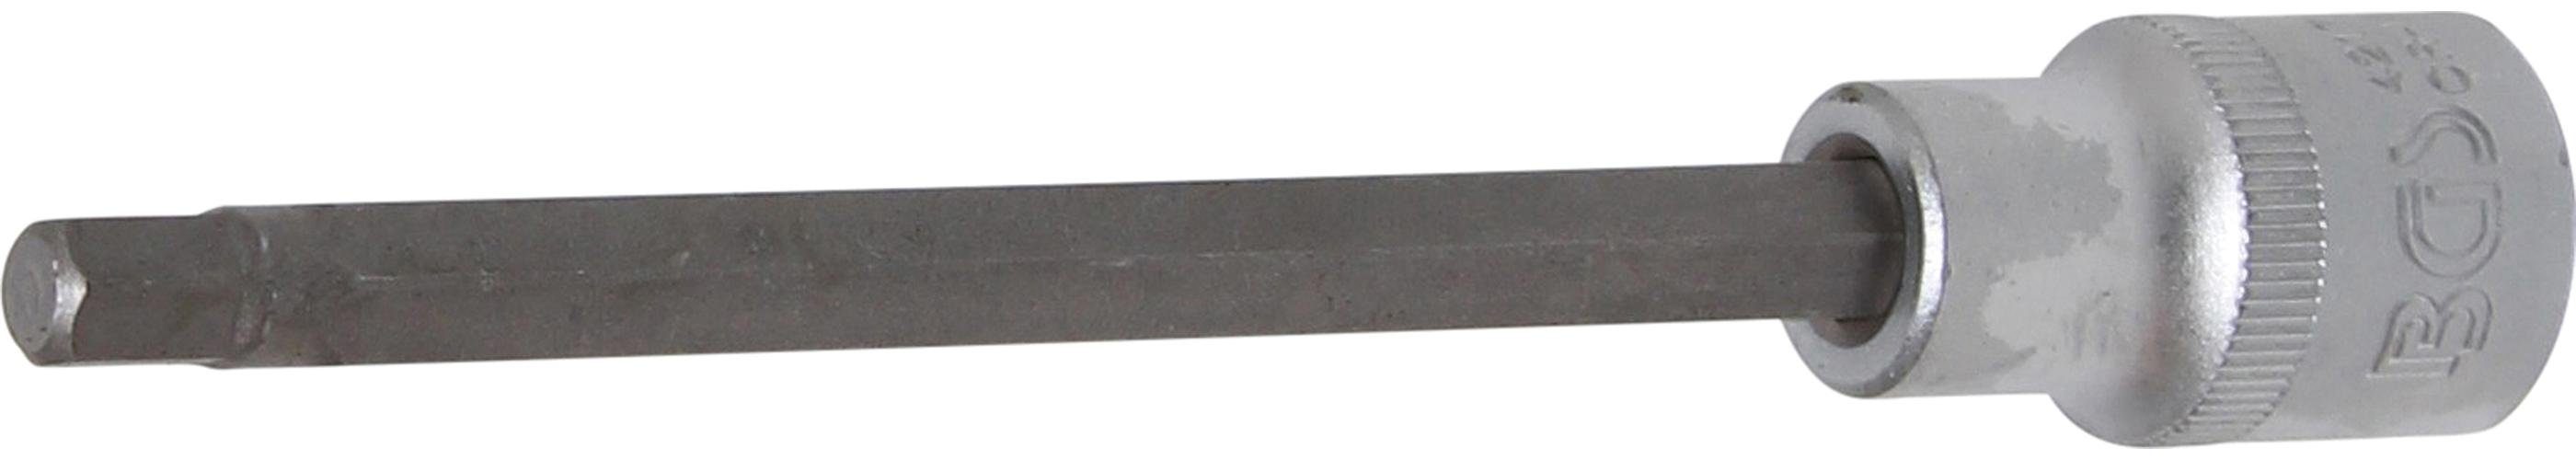 BGS technic Sechskant-Bit Bit-Einsatz, Länge 140 mm, Antrieb Innenvierkant 12,5 mm (1/2), Innensechskant 7 mm